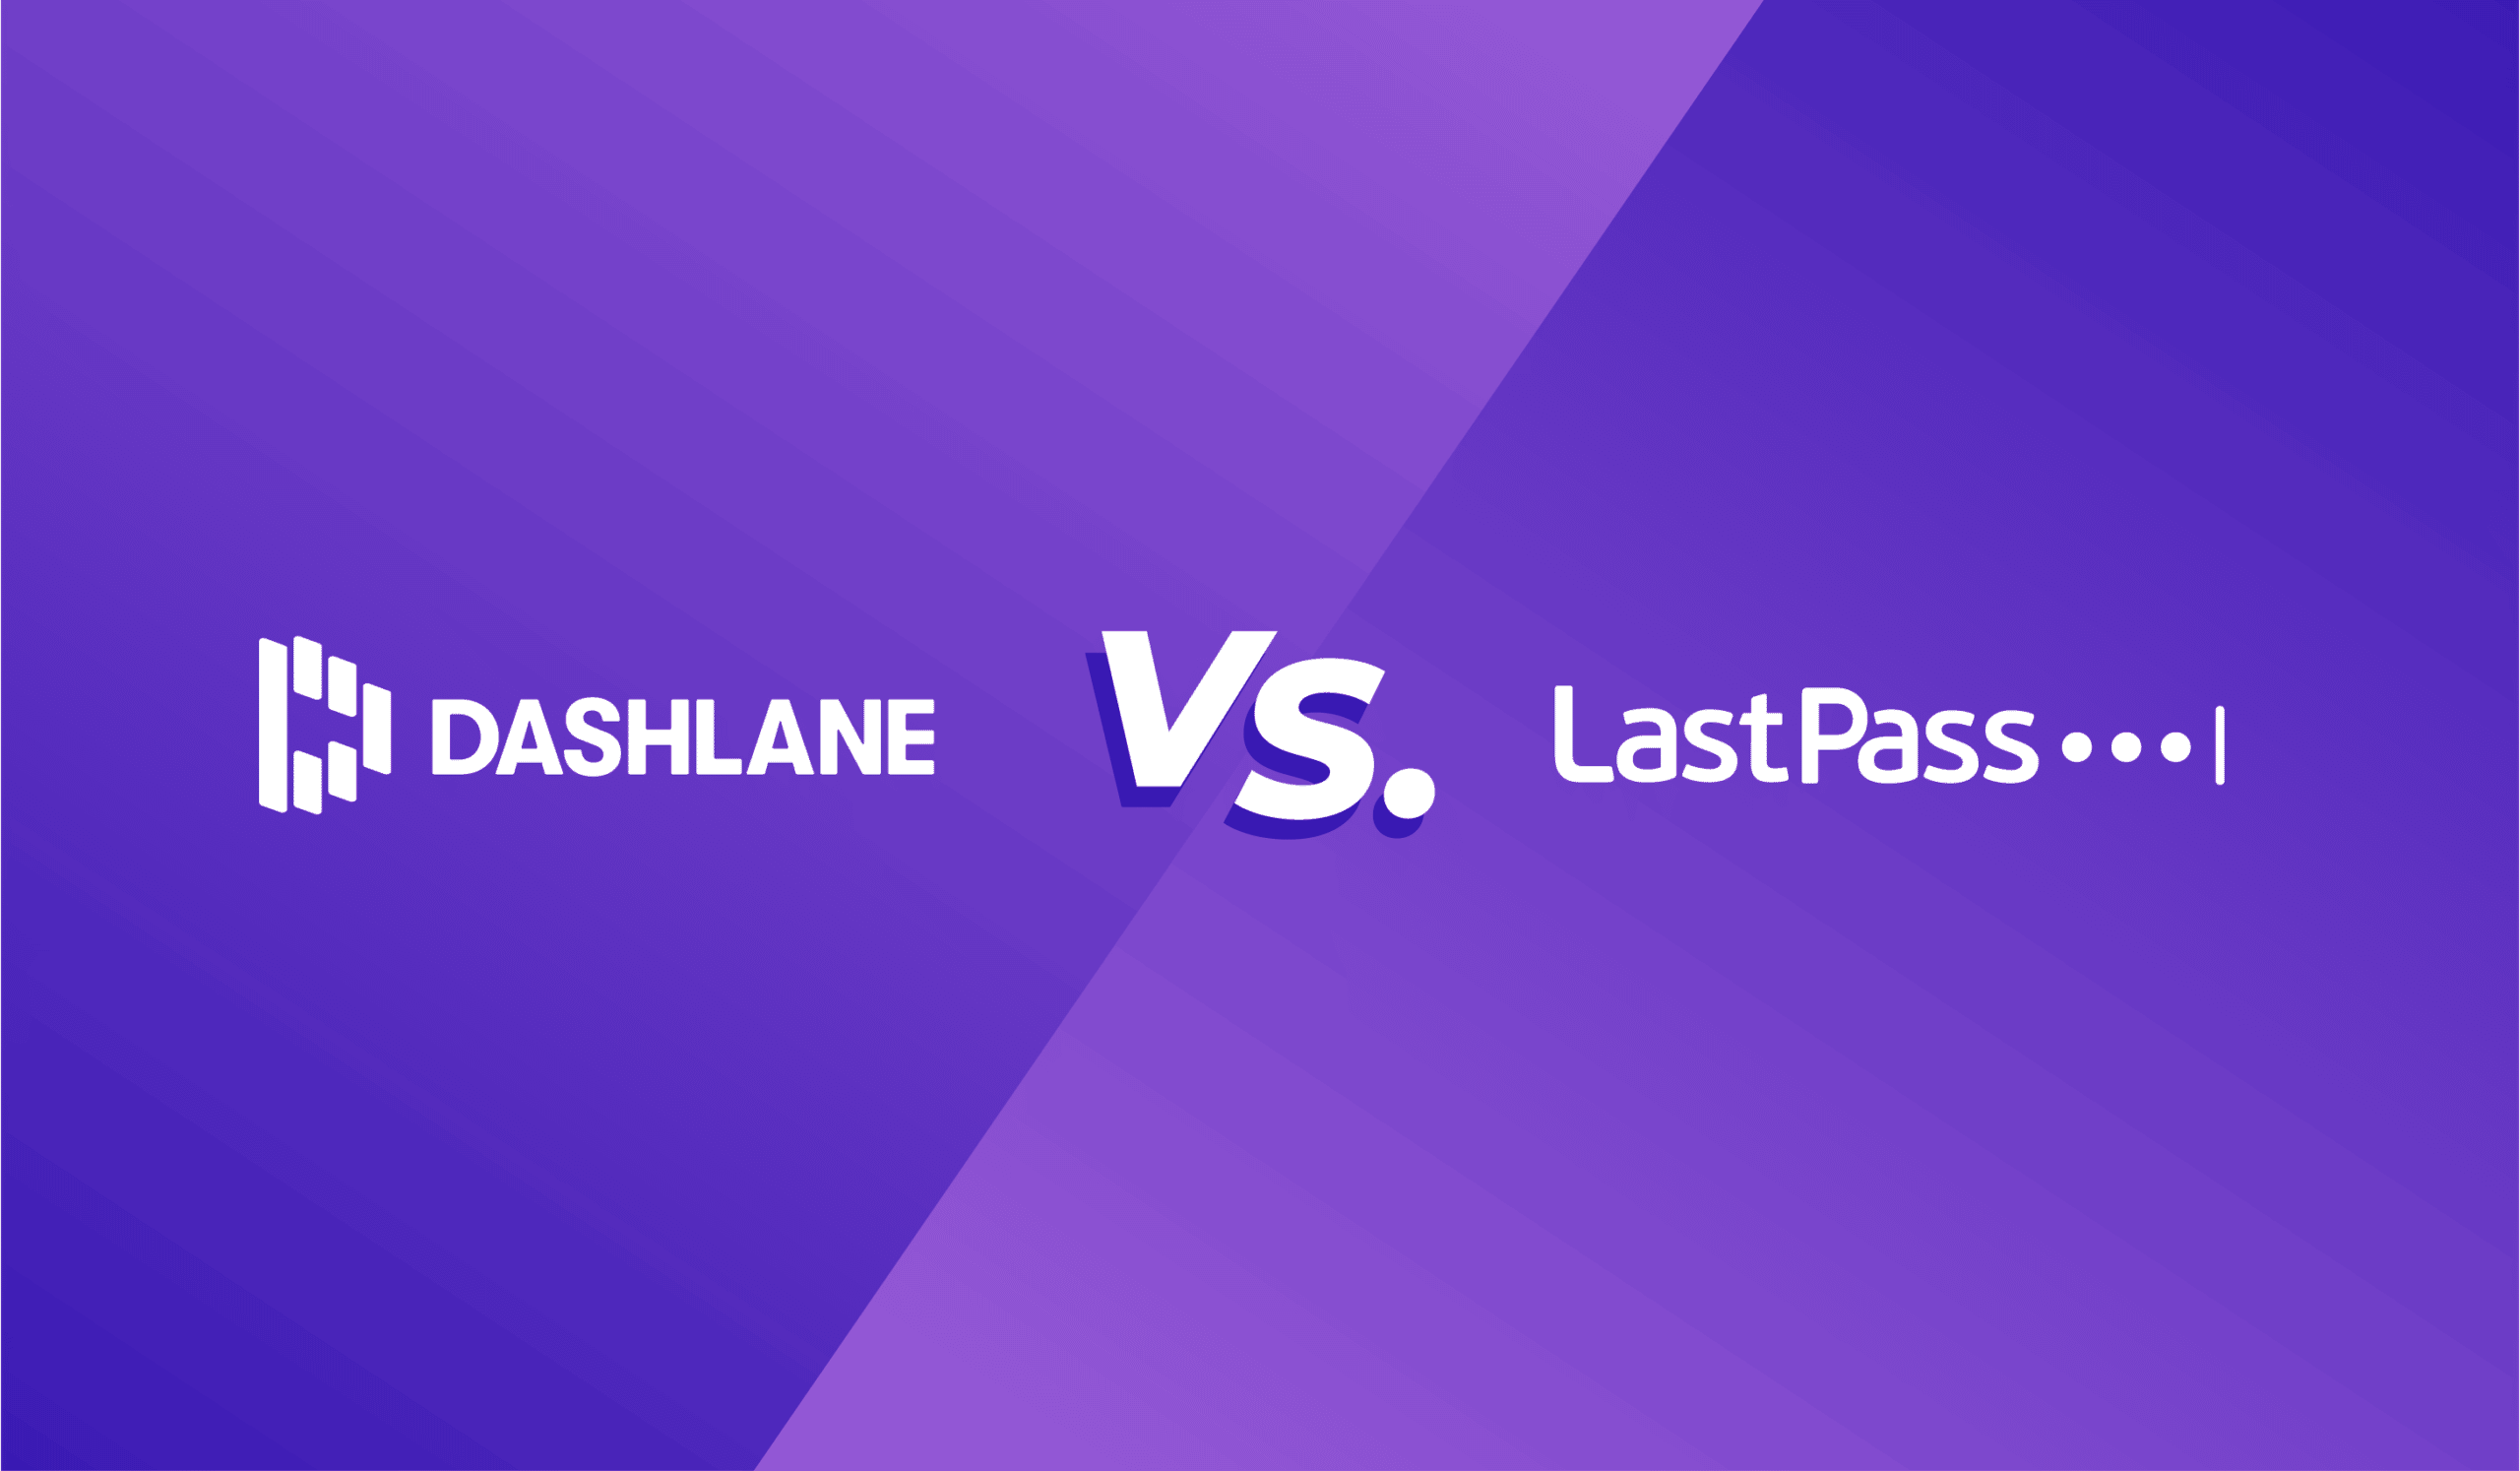 Photo of Dashlane vs. LastPass logos.